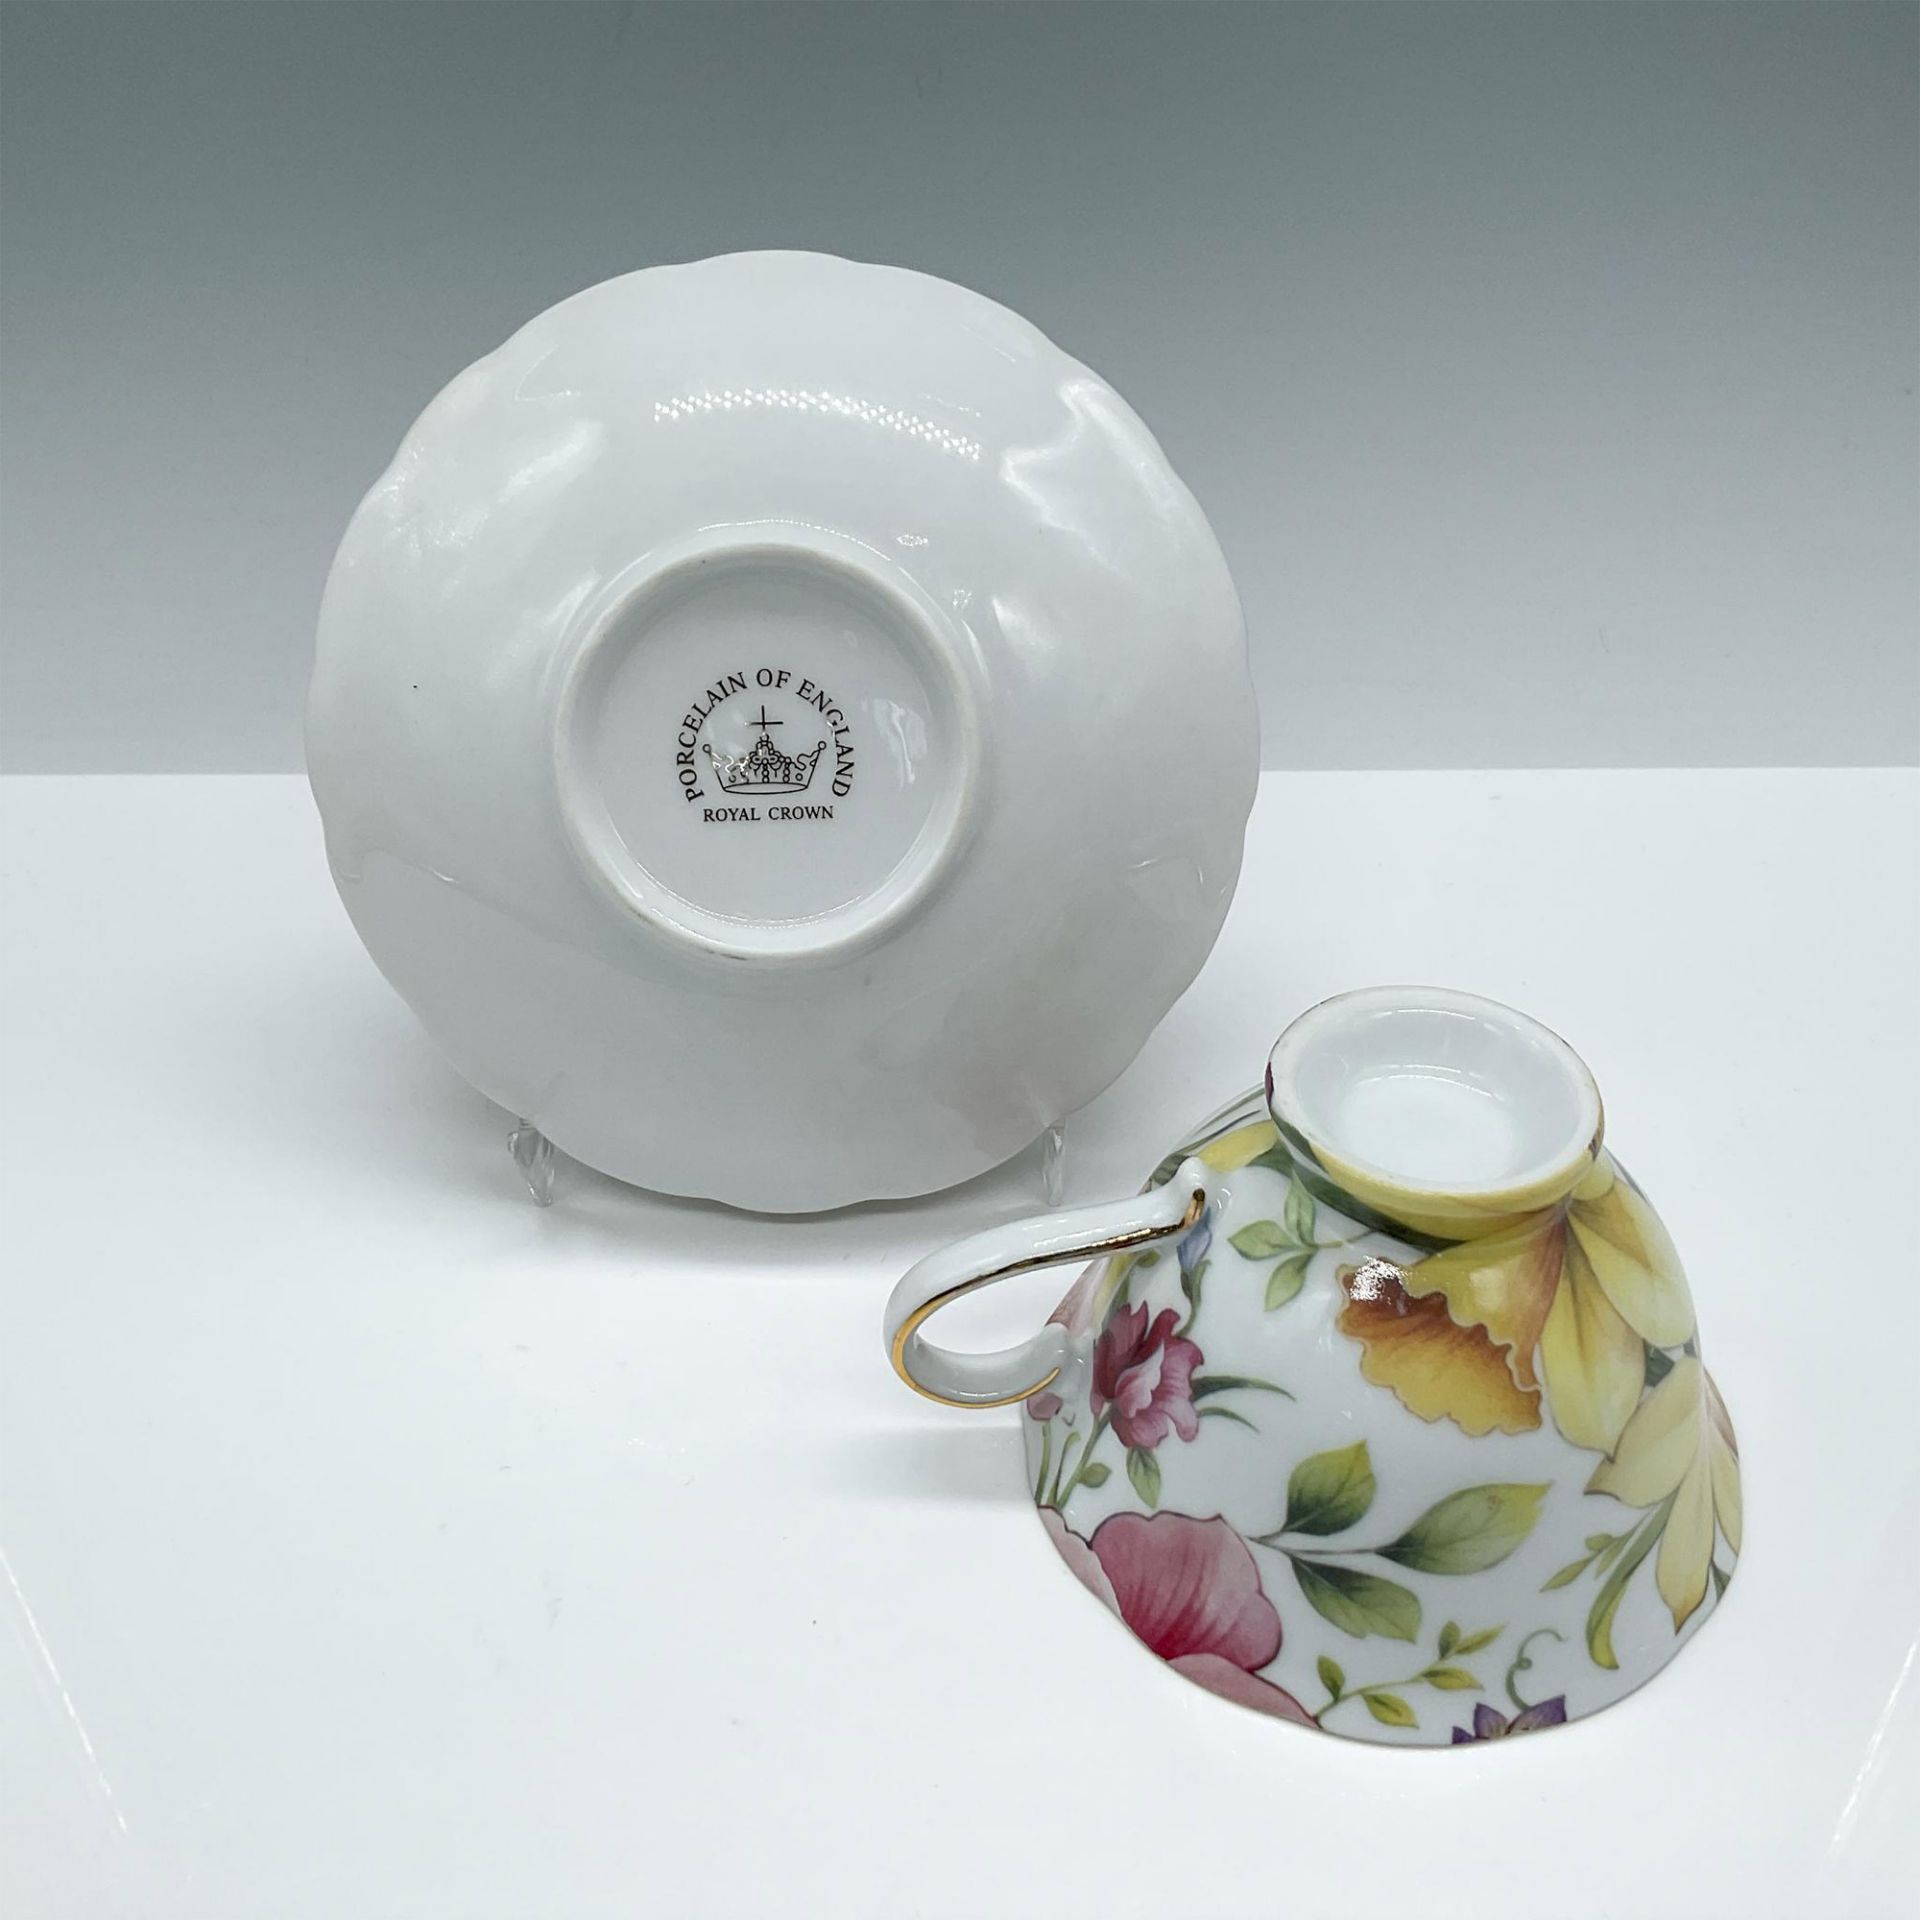 Royal Crown Porcelain Tea Cup and Saucer Set, Floral - Image 4 of 4